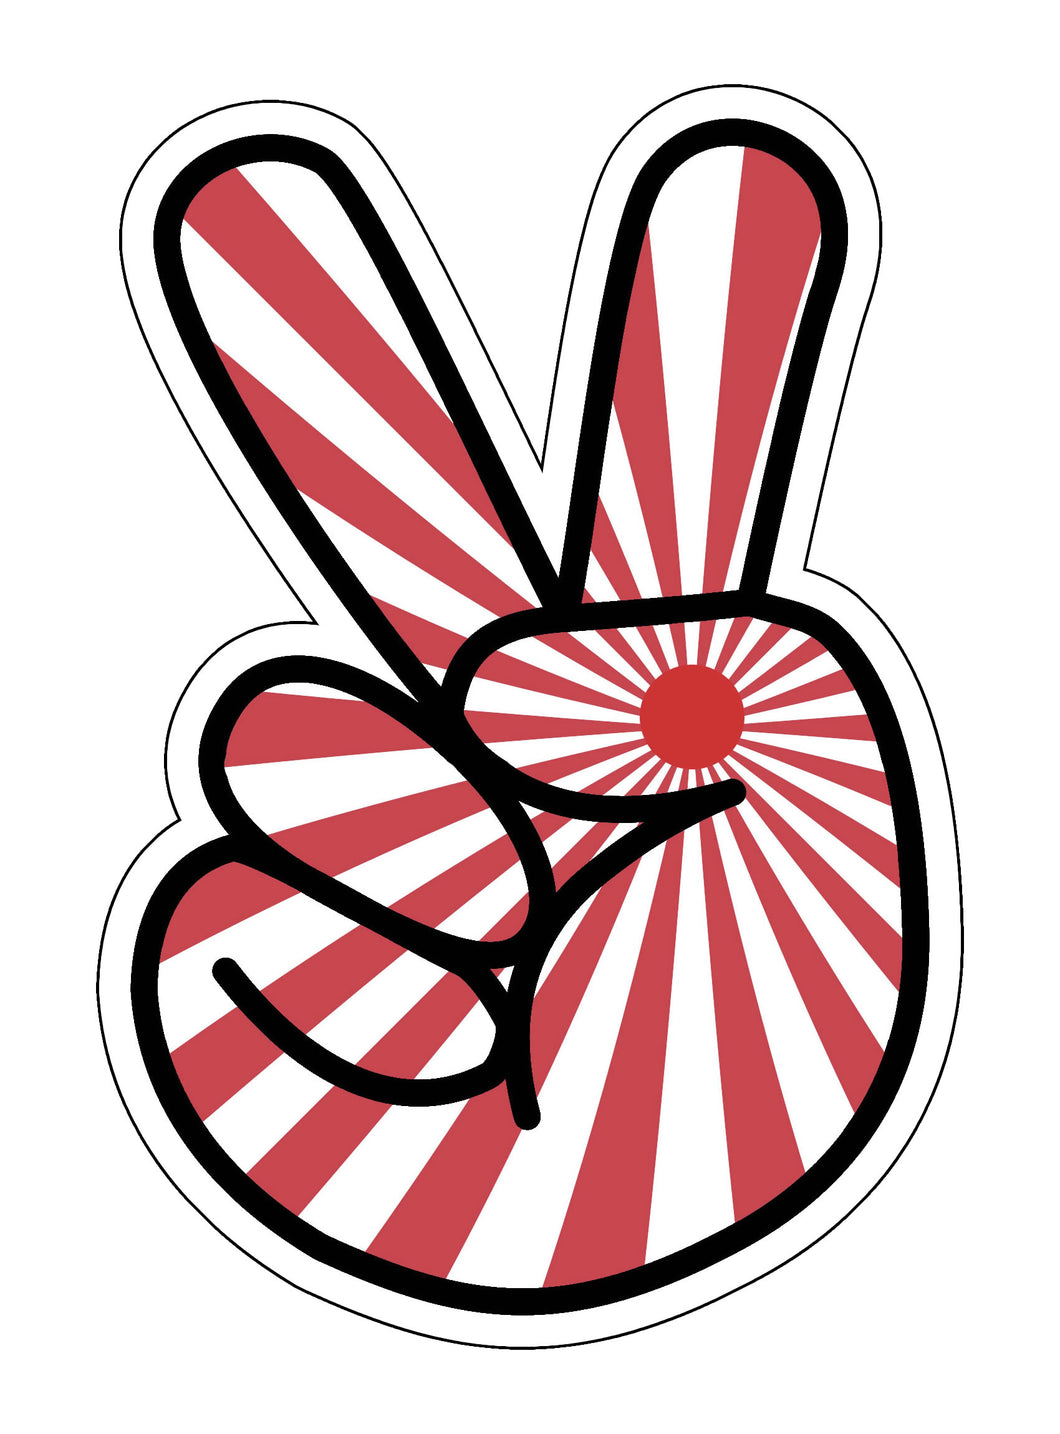 Japanese Rays Hand Peace Sign Logo JDM Drag Drift Tuner Racing Sticker Decal 3.5